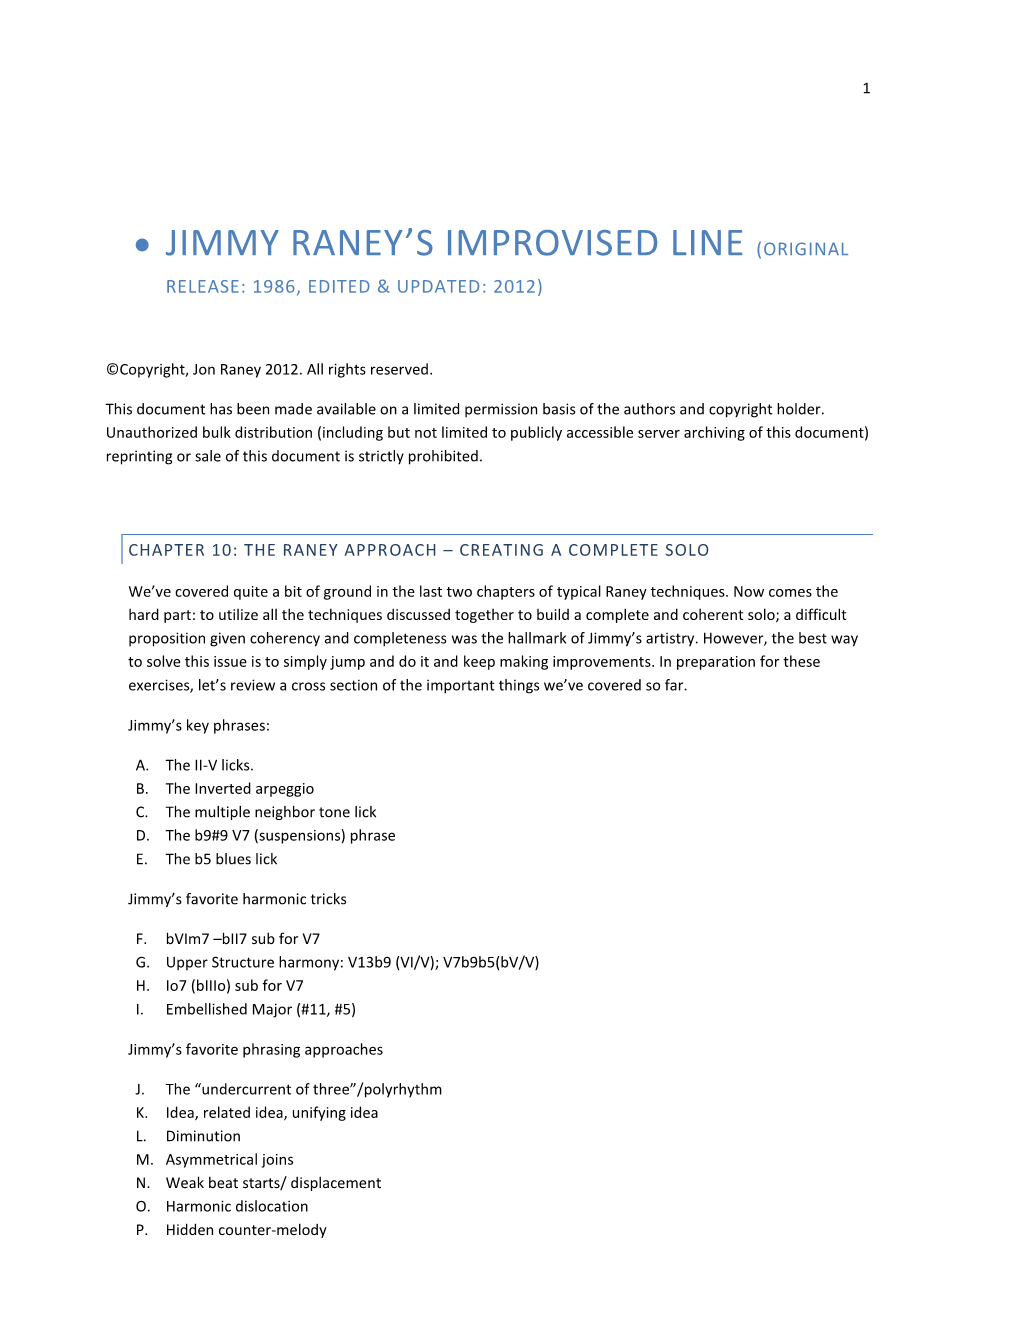 Jimmy Raney's Improvised Line